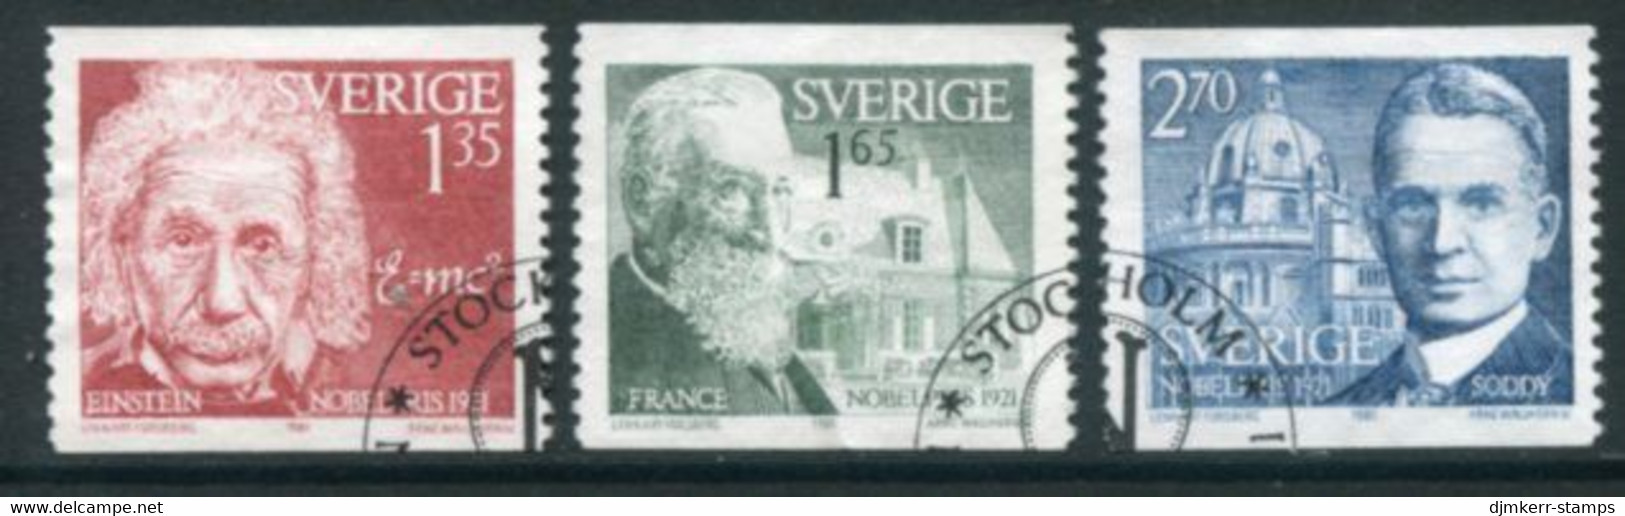 SWEDEN 1981 Nobel Prize Laureates Of 1921 Used.  Michel 1175-77 - Used Stamps